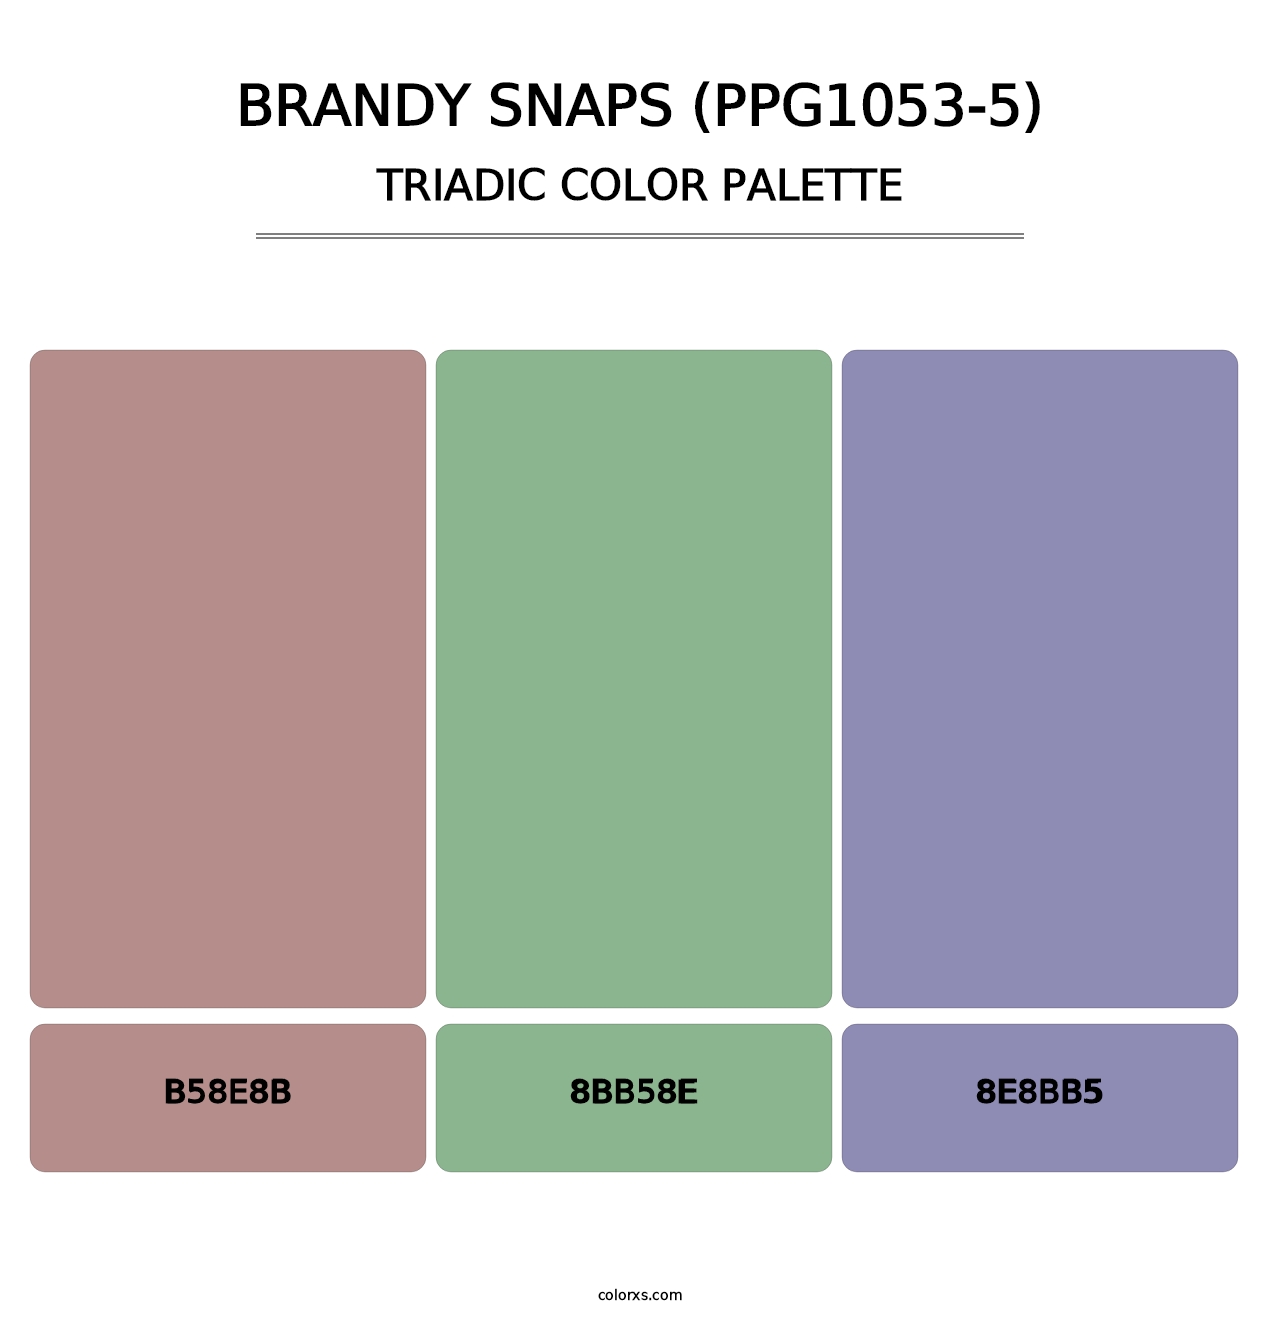 Brandy Snaps (PPG1053-5) - Triadic Color Palette